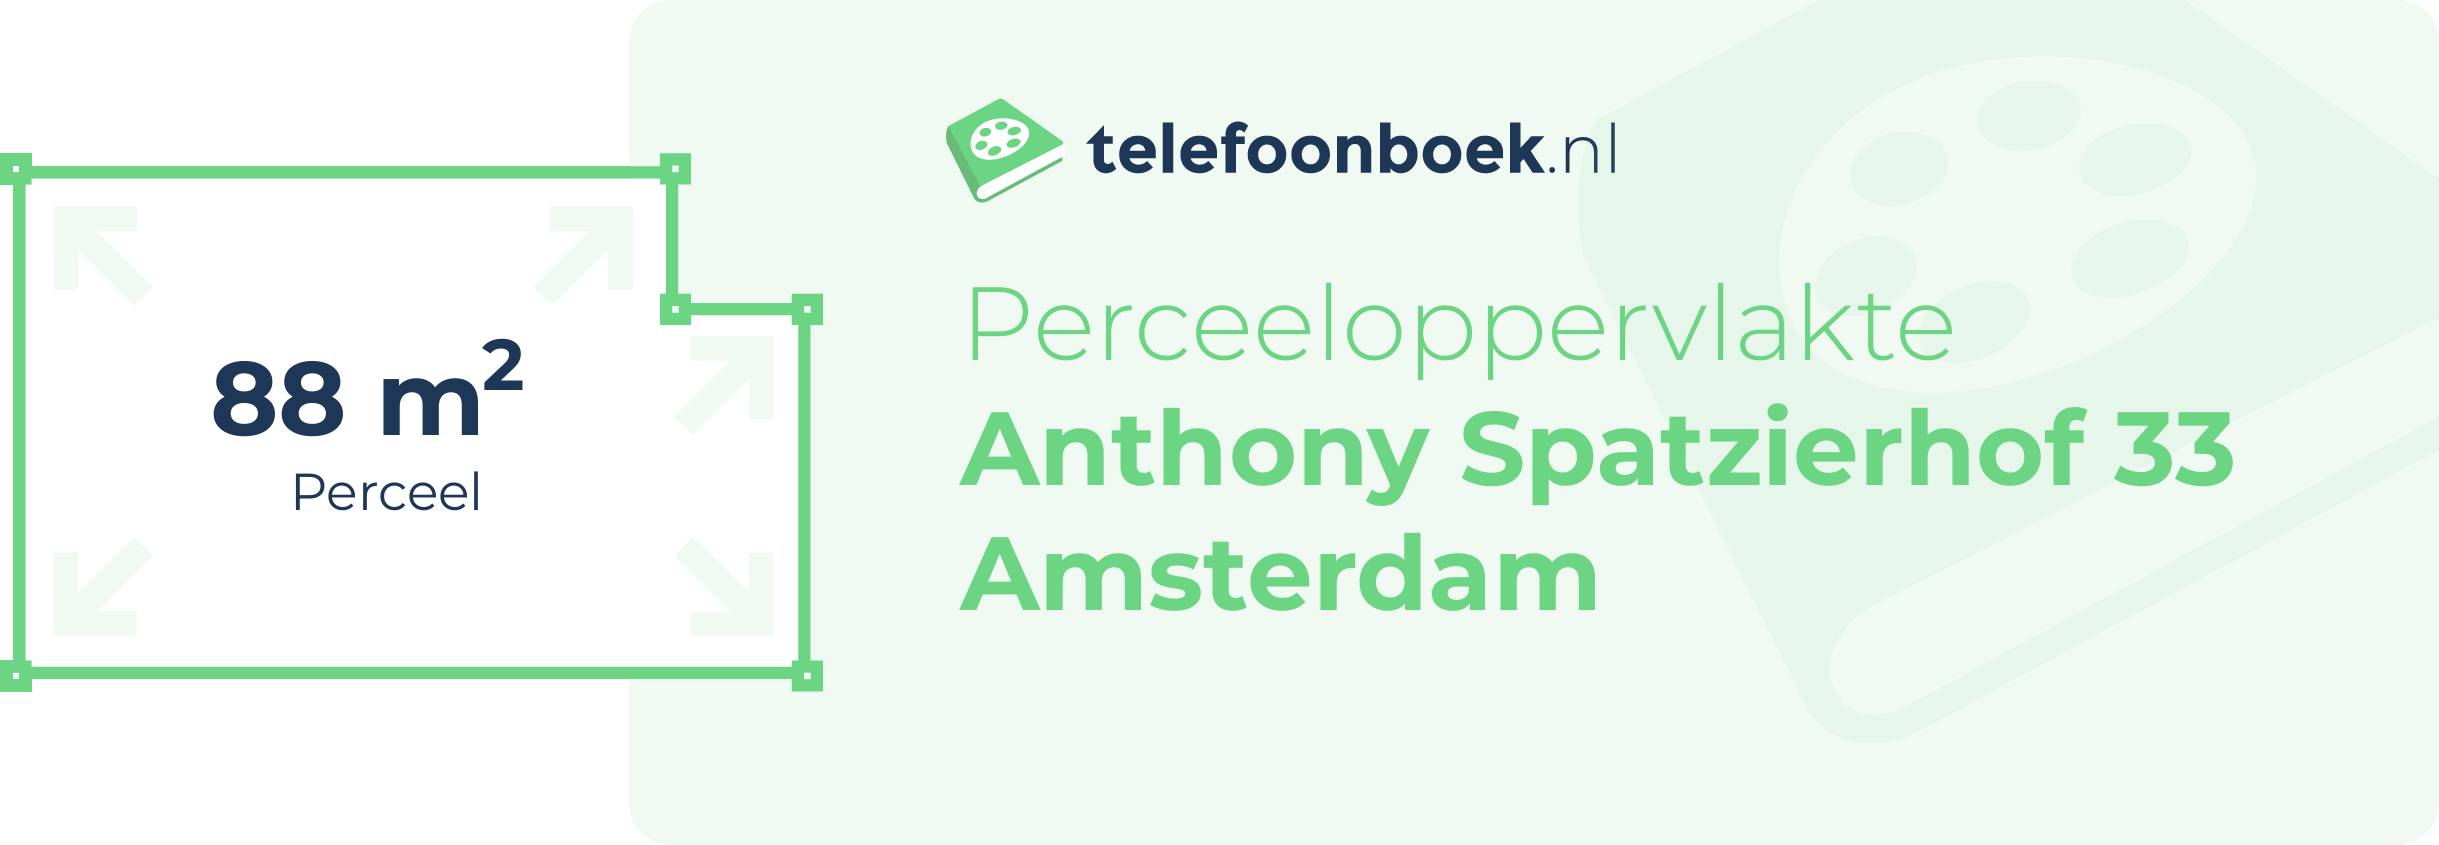 Perceeloppervlakte Anthony Spatzierhof 33 Amsterdam